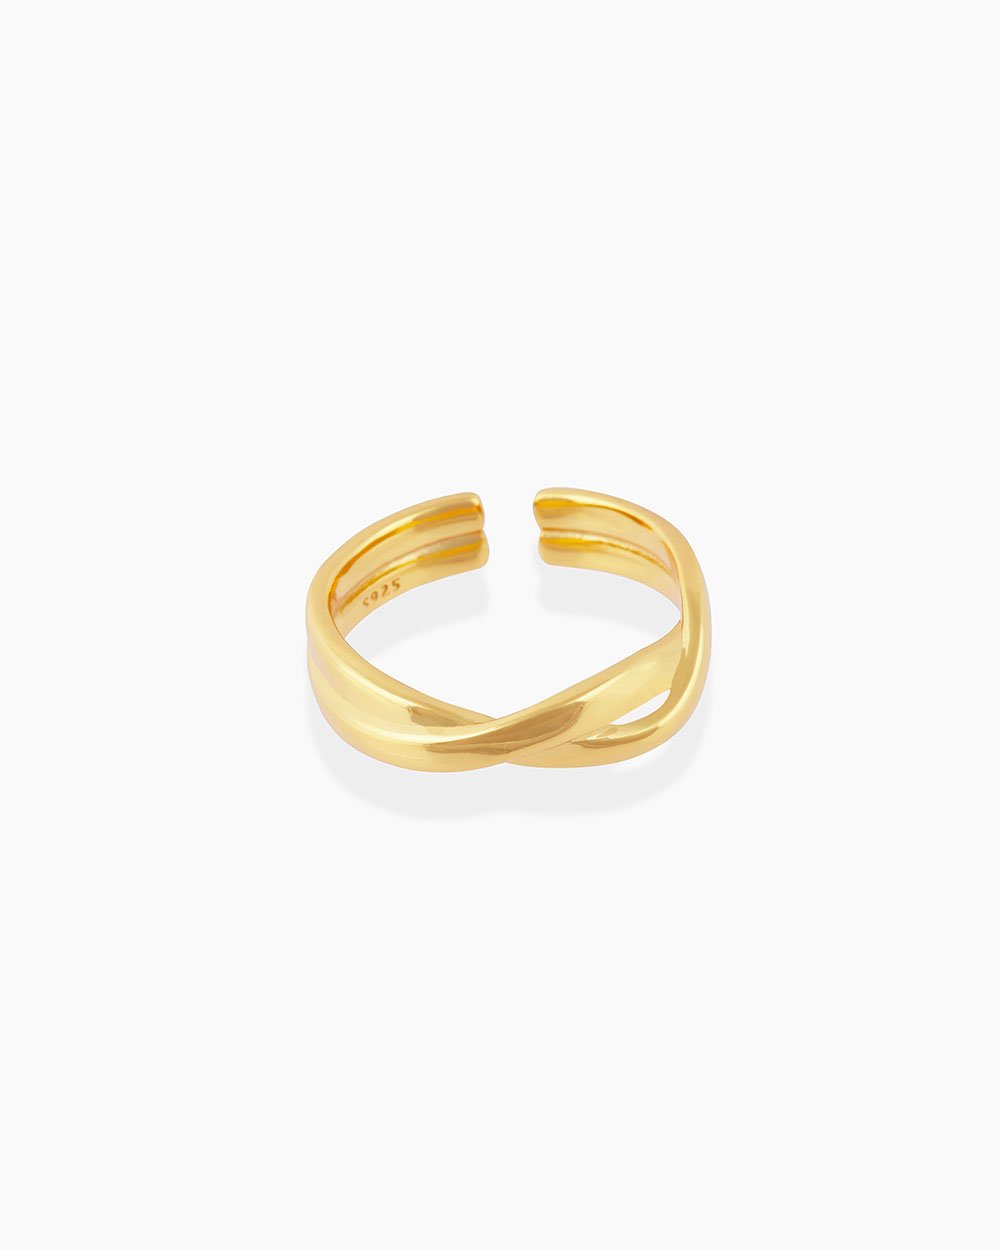 Avelen Gold Plated Adjustable Ring